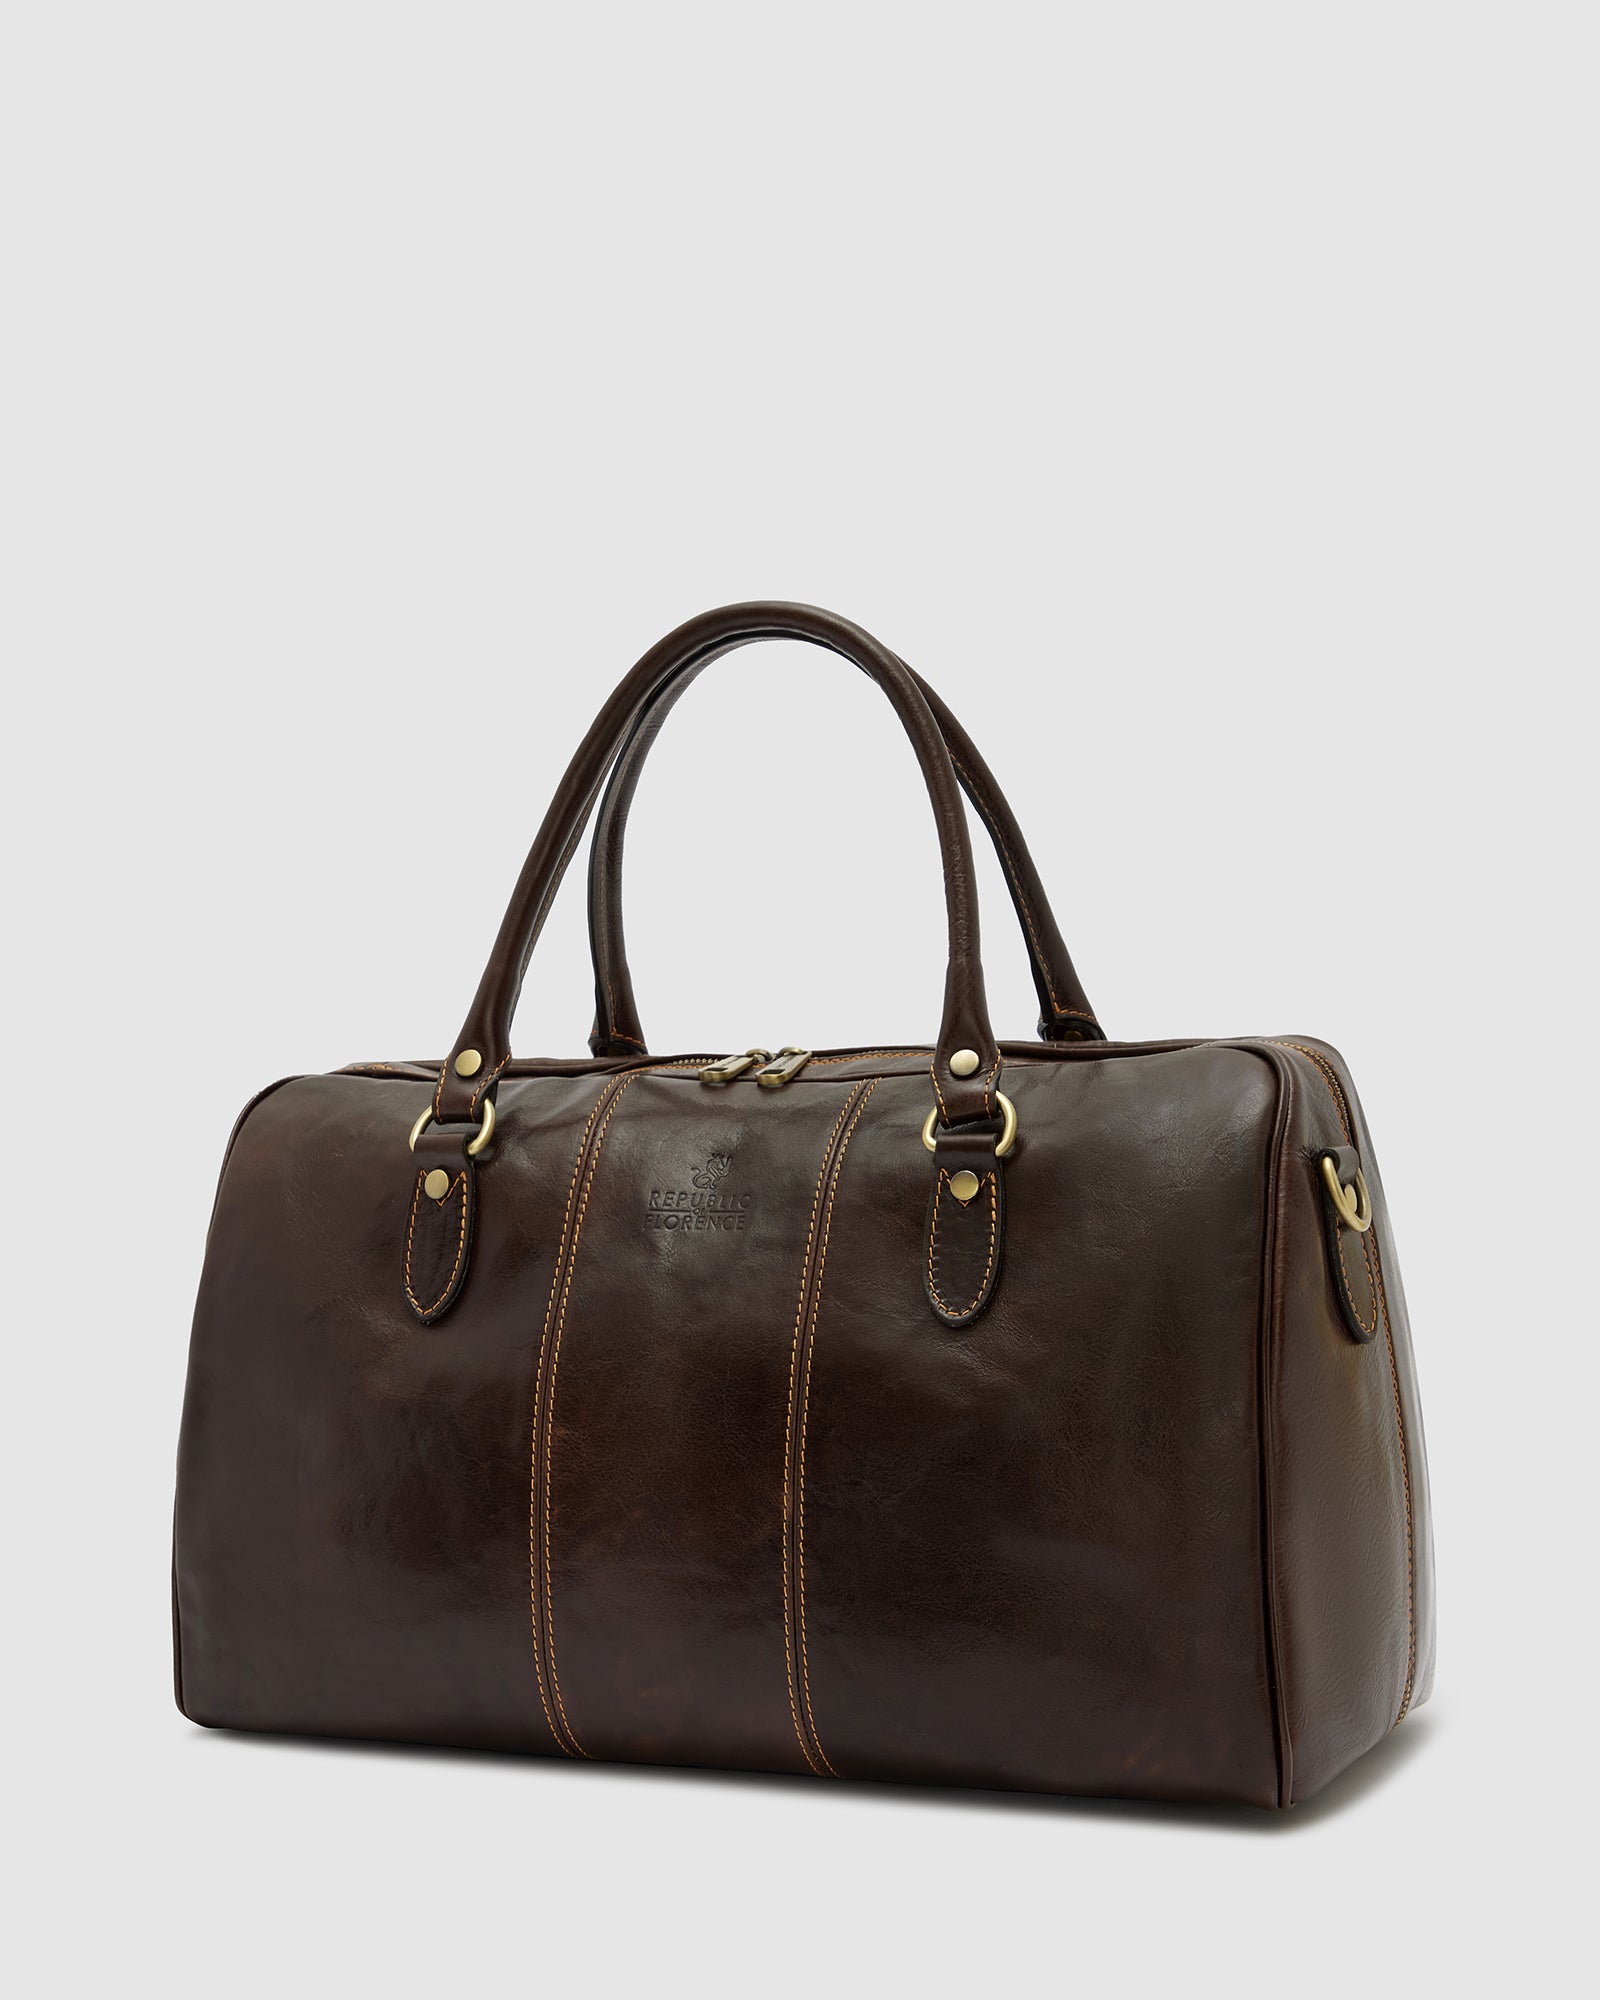 Albertis Piccolo Chocolate - Leather Duffle Bag